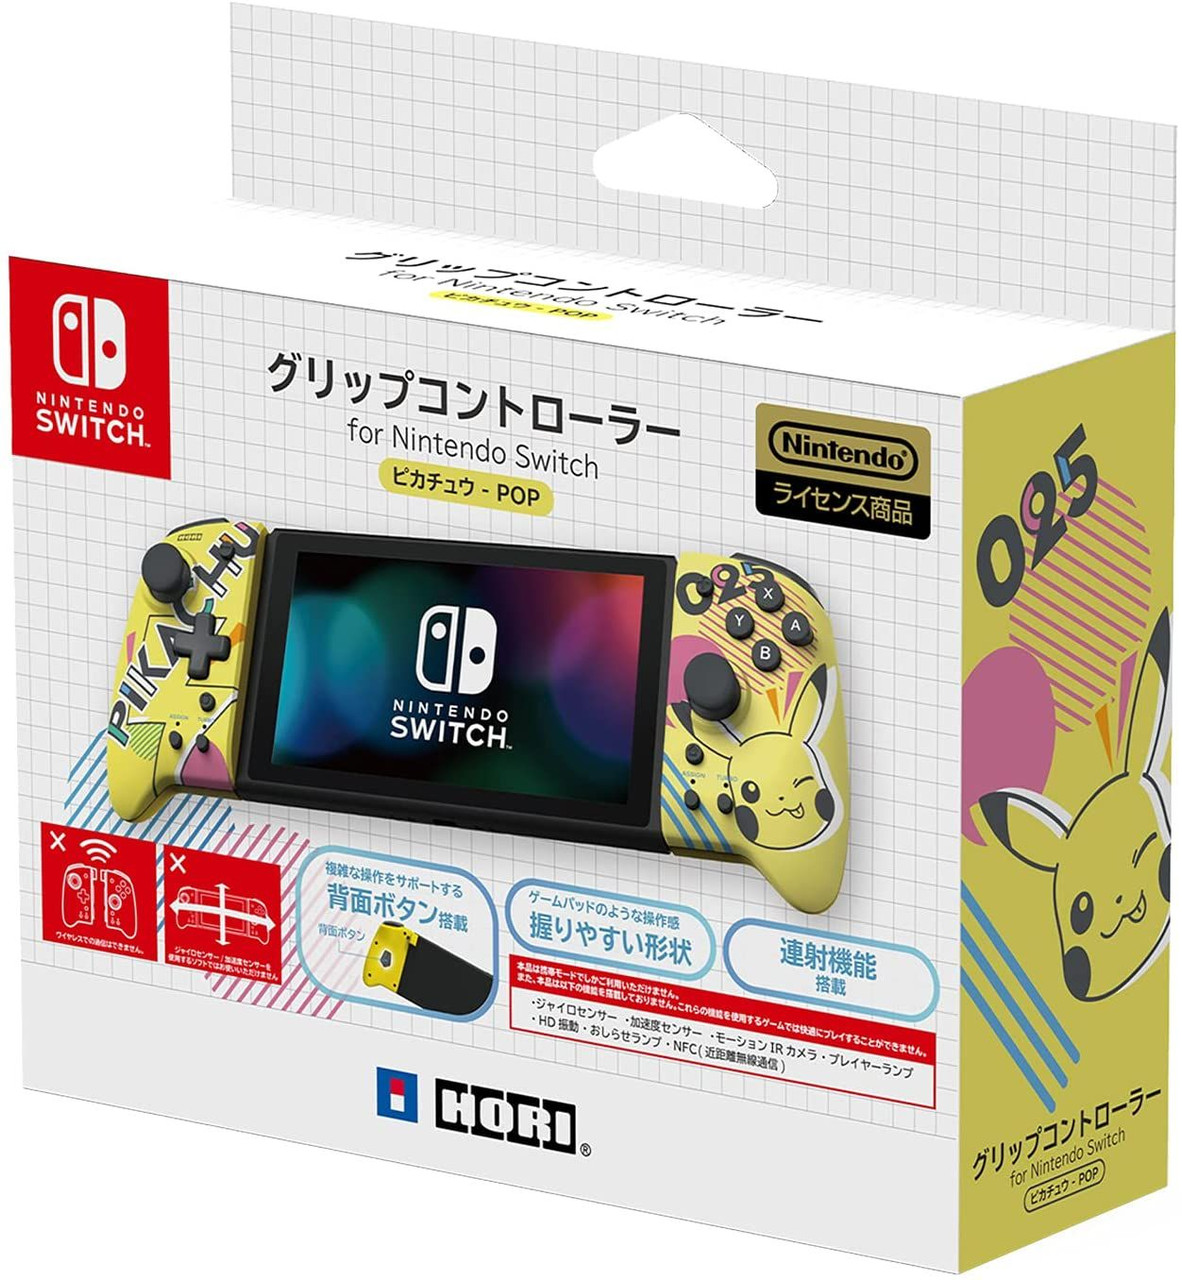 Pro (Pikachu-Pop) Split Nintendo Pad for Switch